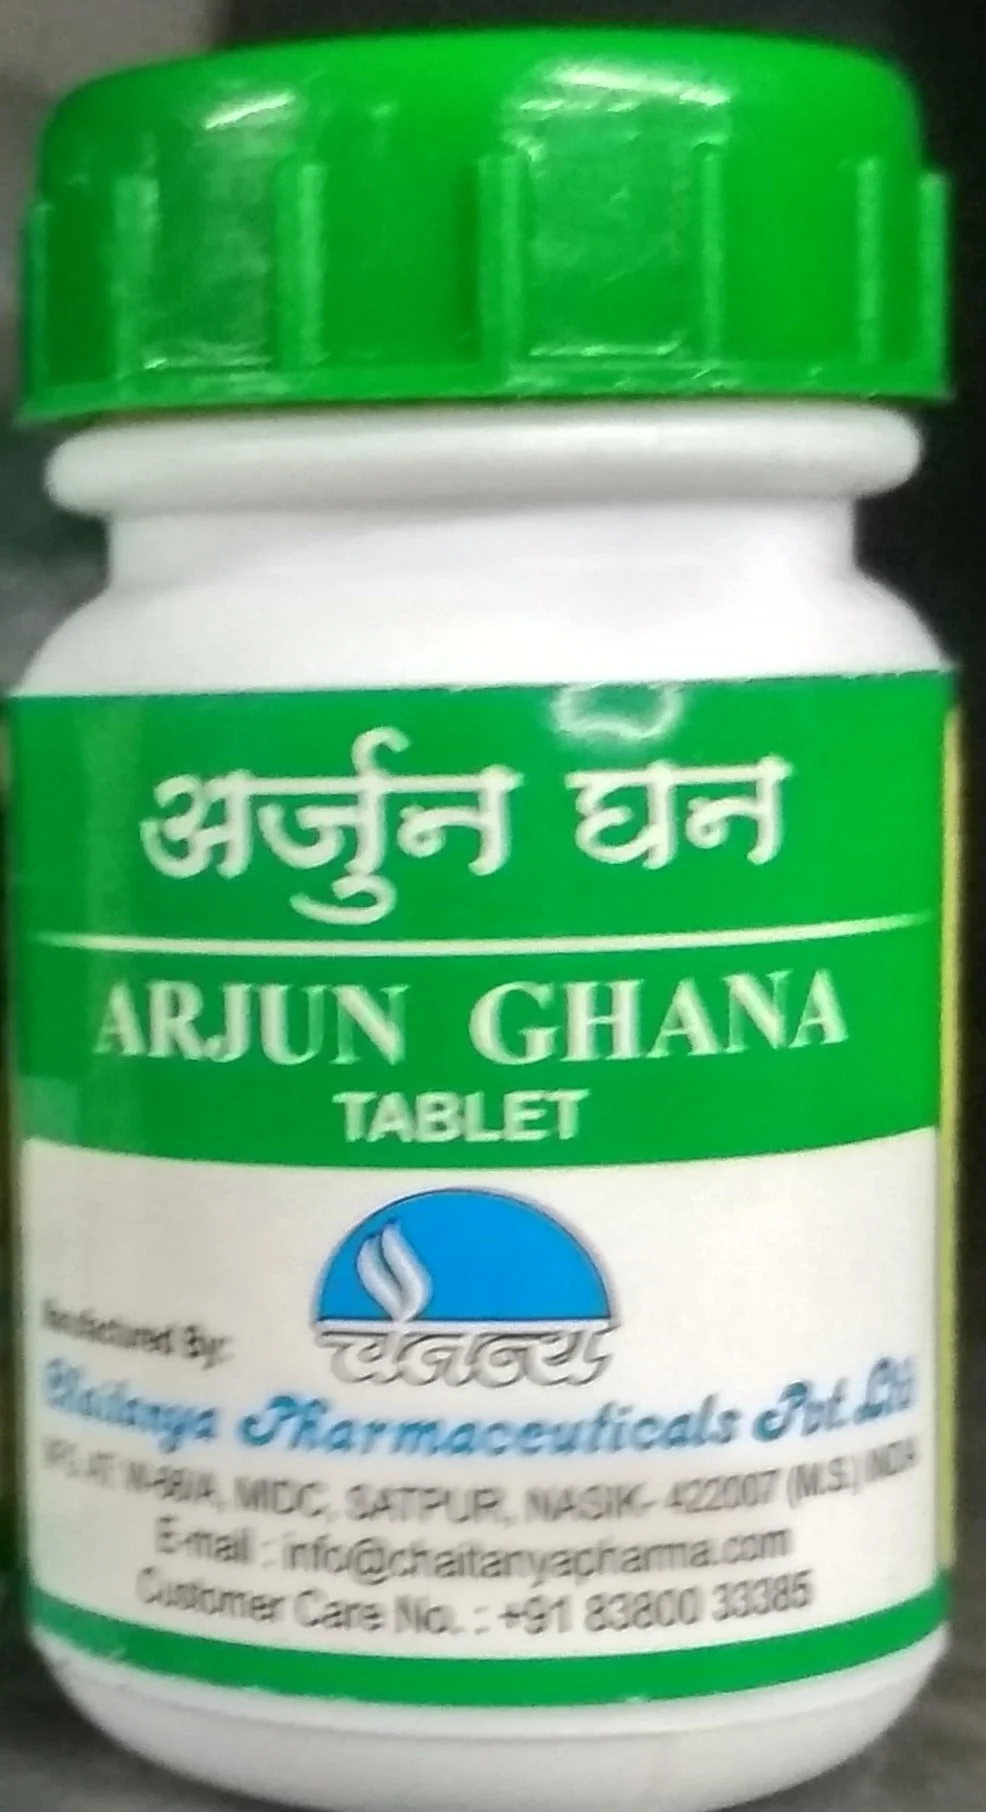 arjun ghana 60 tab upto 20% off chaitanya pharmaceuticals